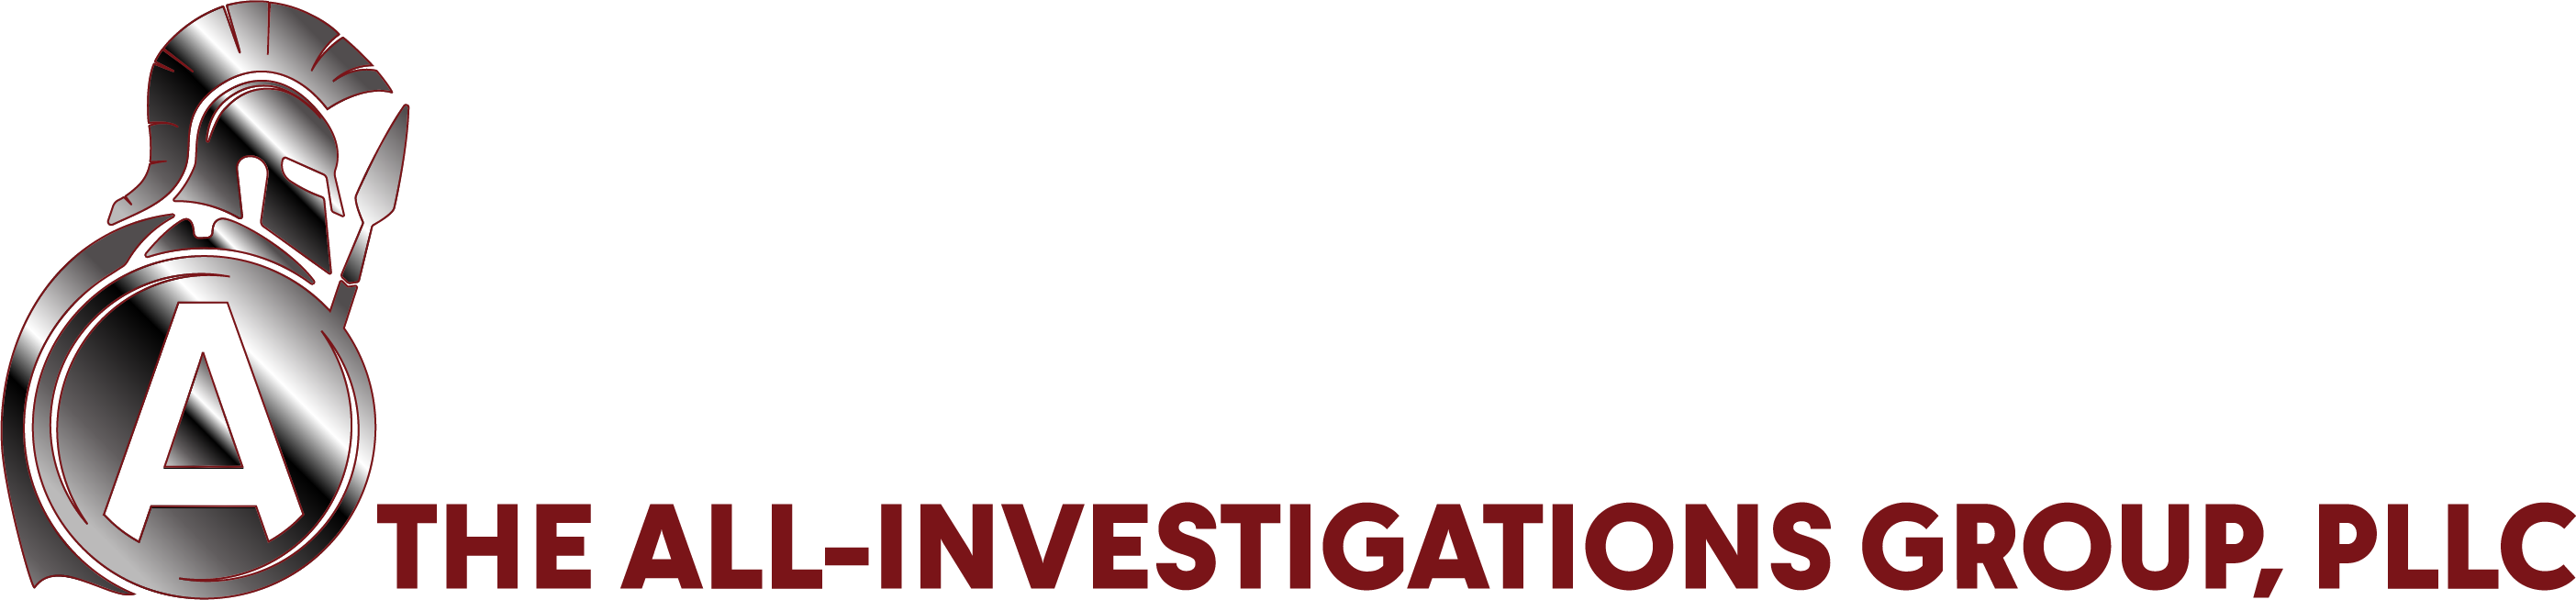 All-Investigations